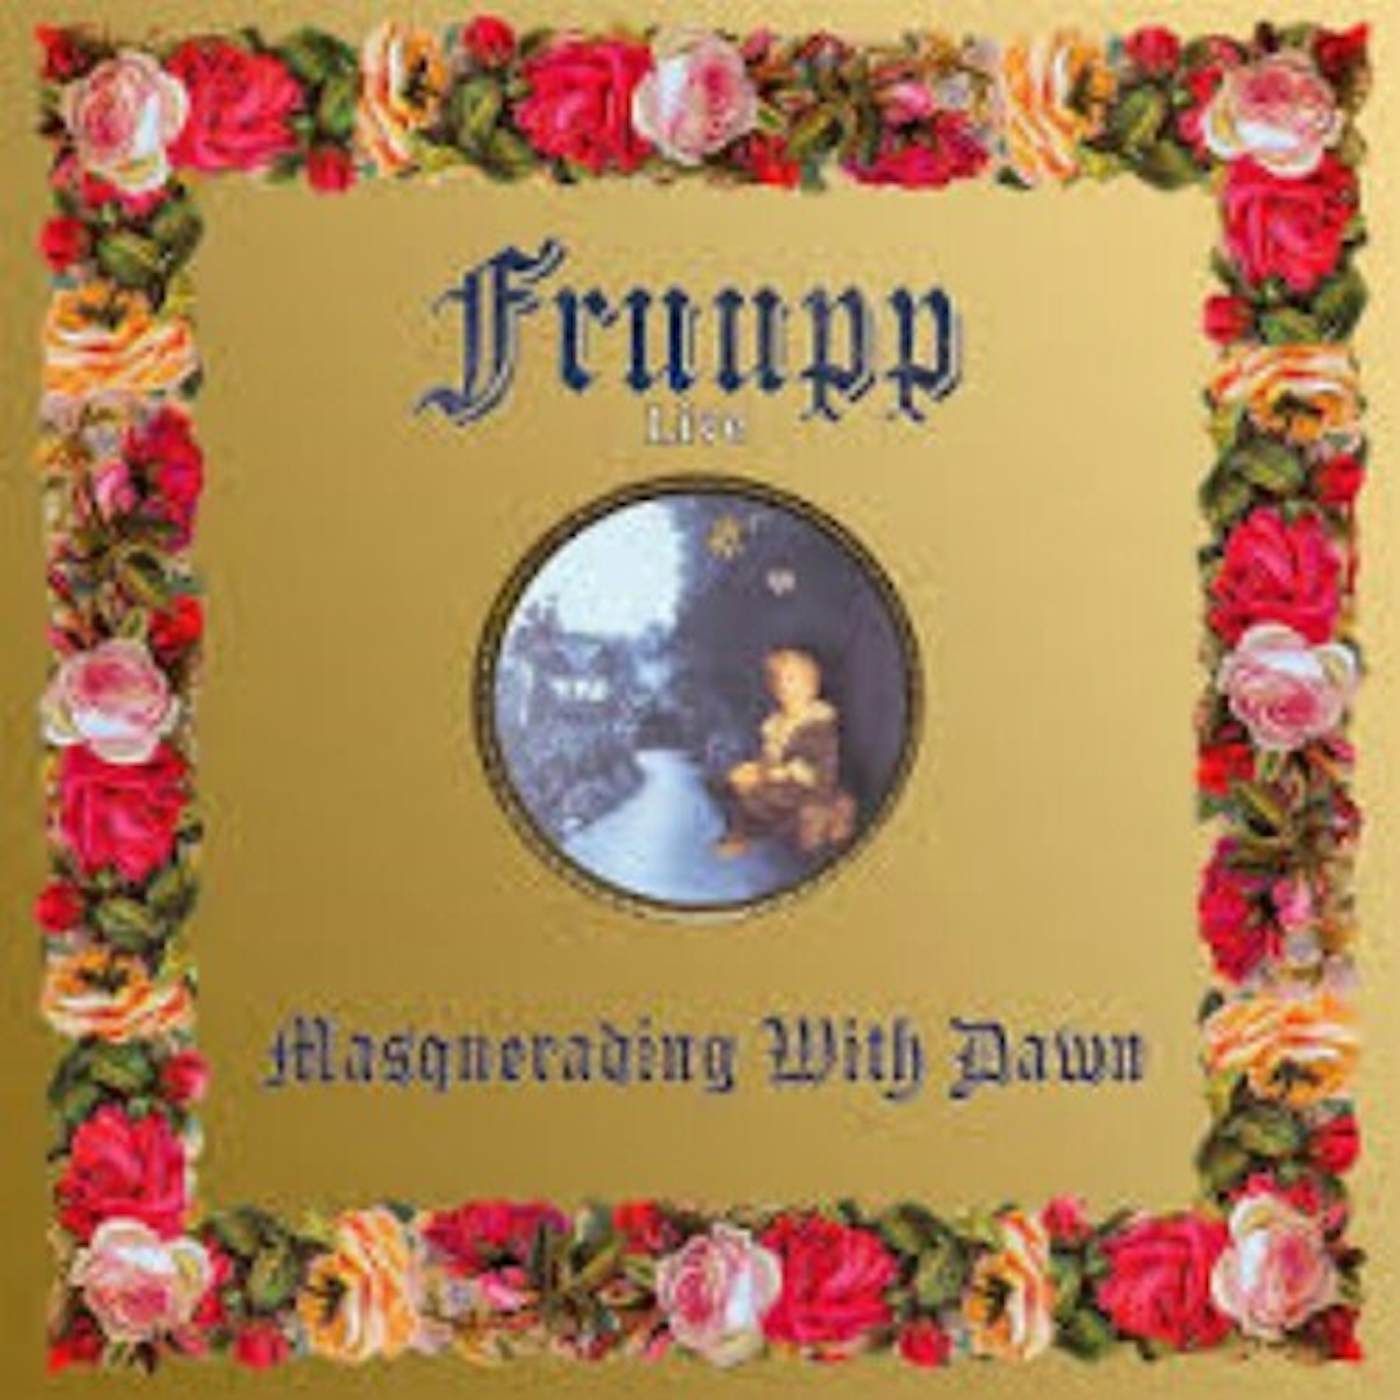 Fruupp Masquerading With Dawn Vinyl Record